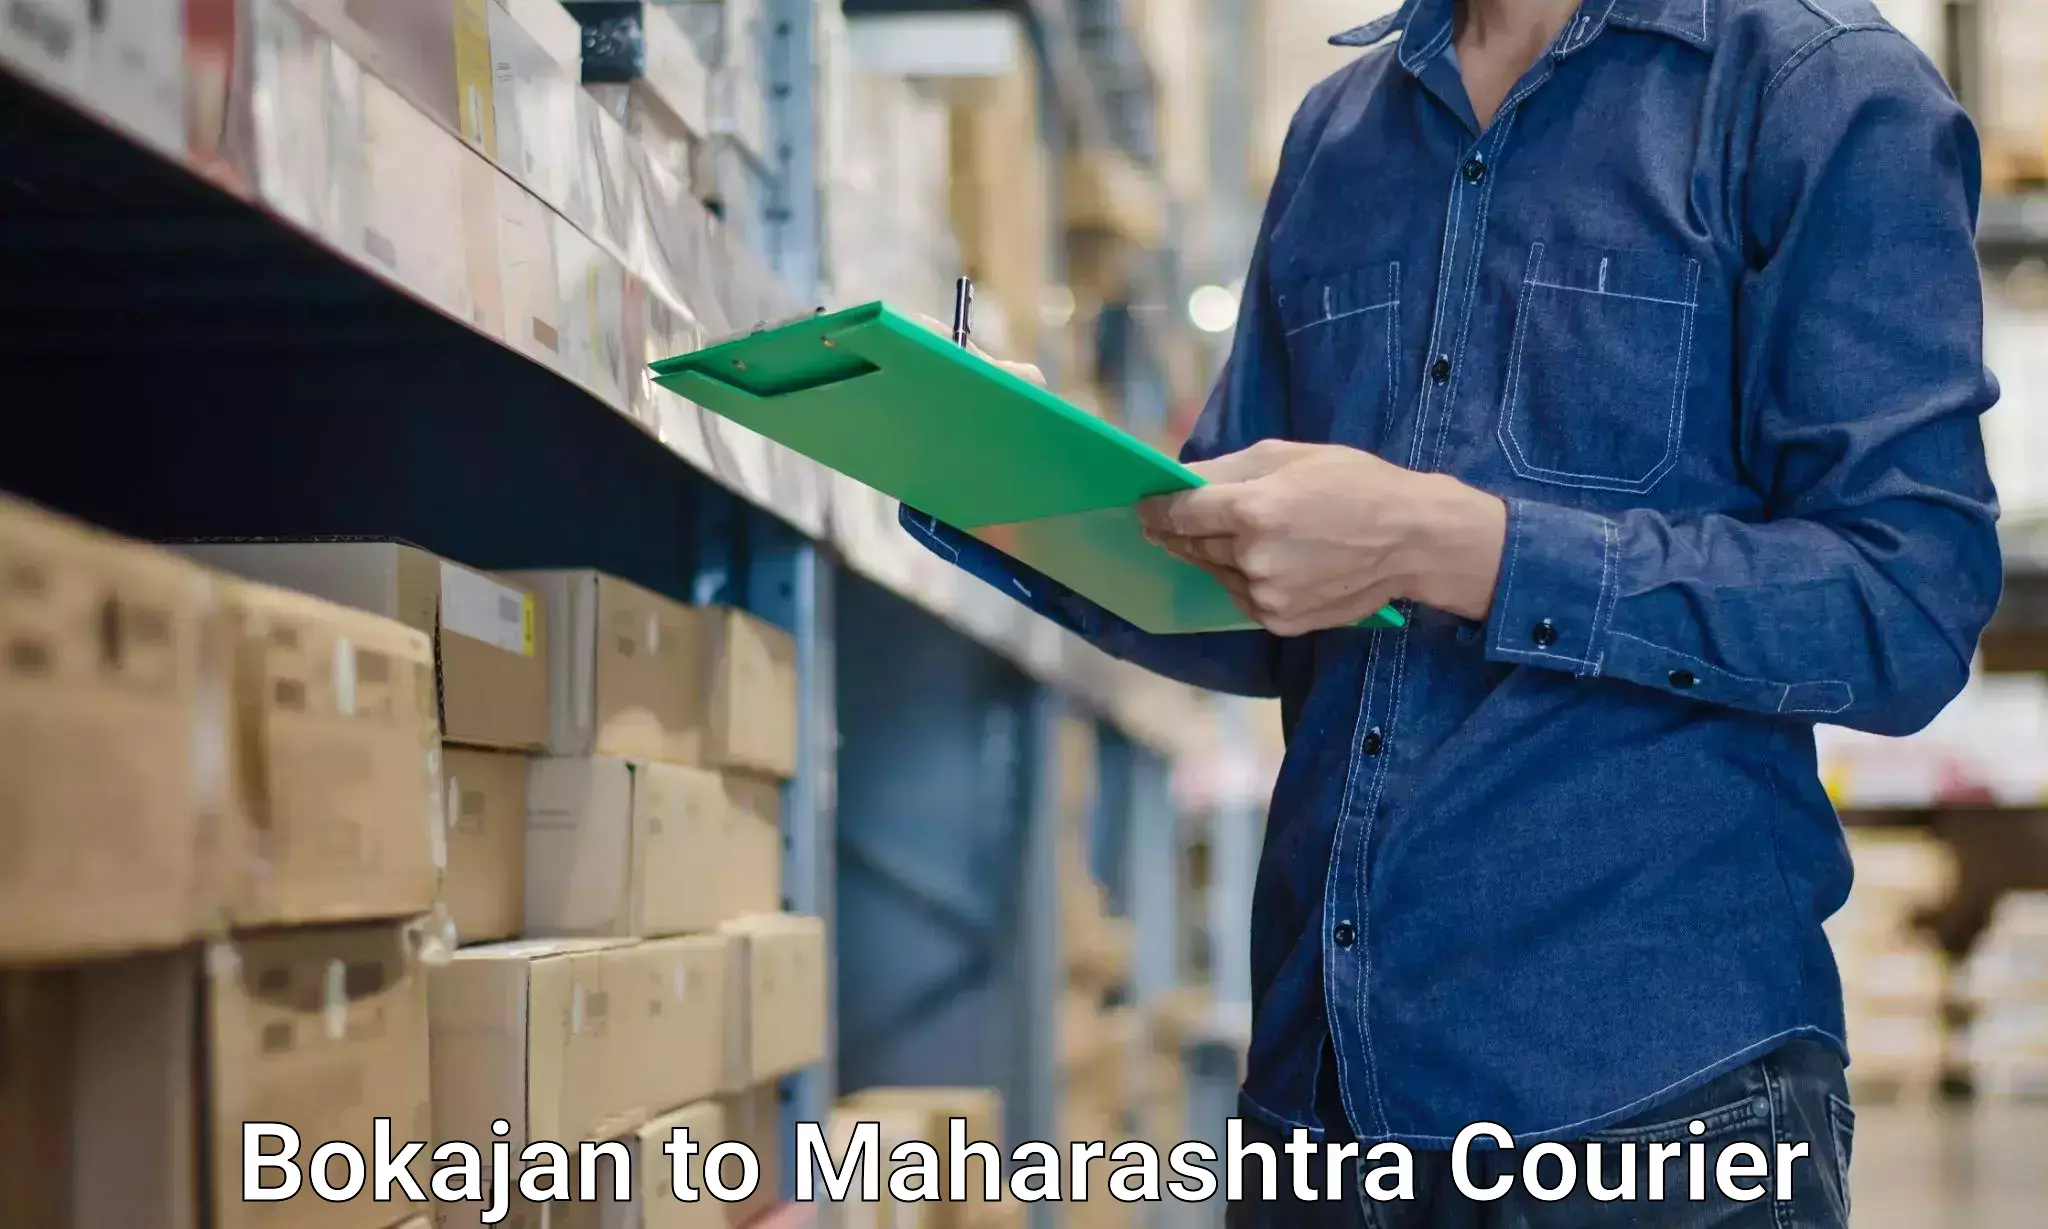 Household goods movers in Bokajan to Maharashtra